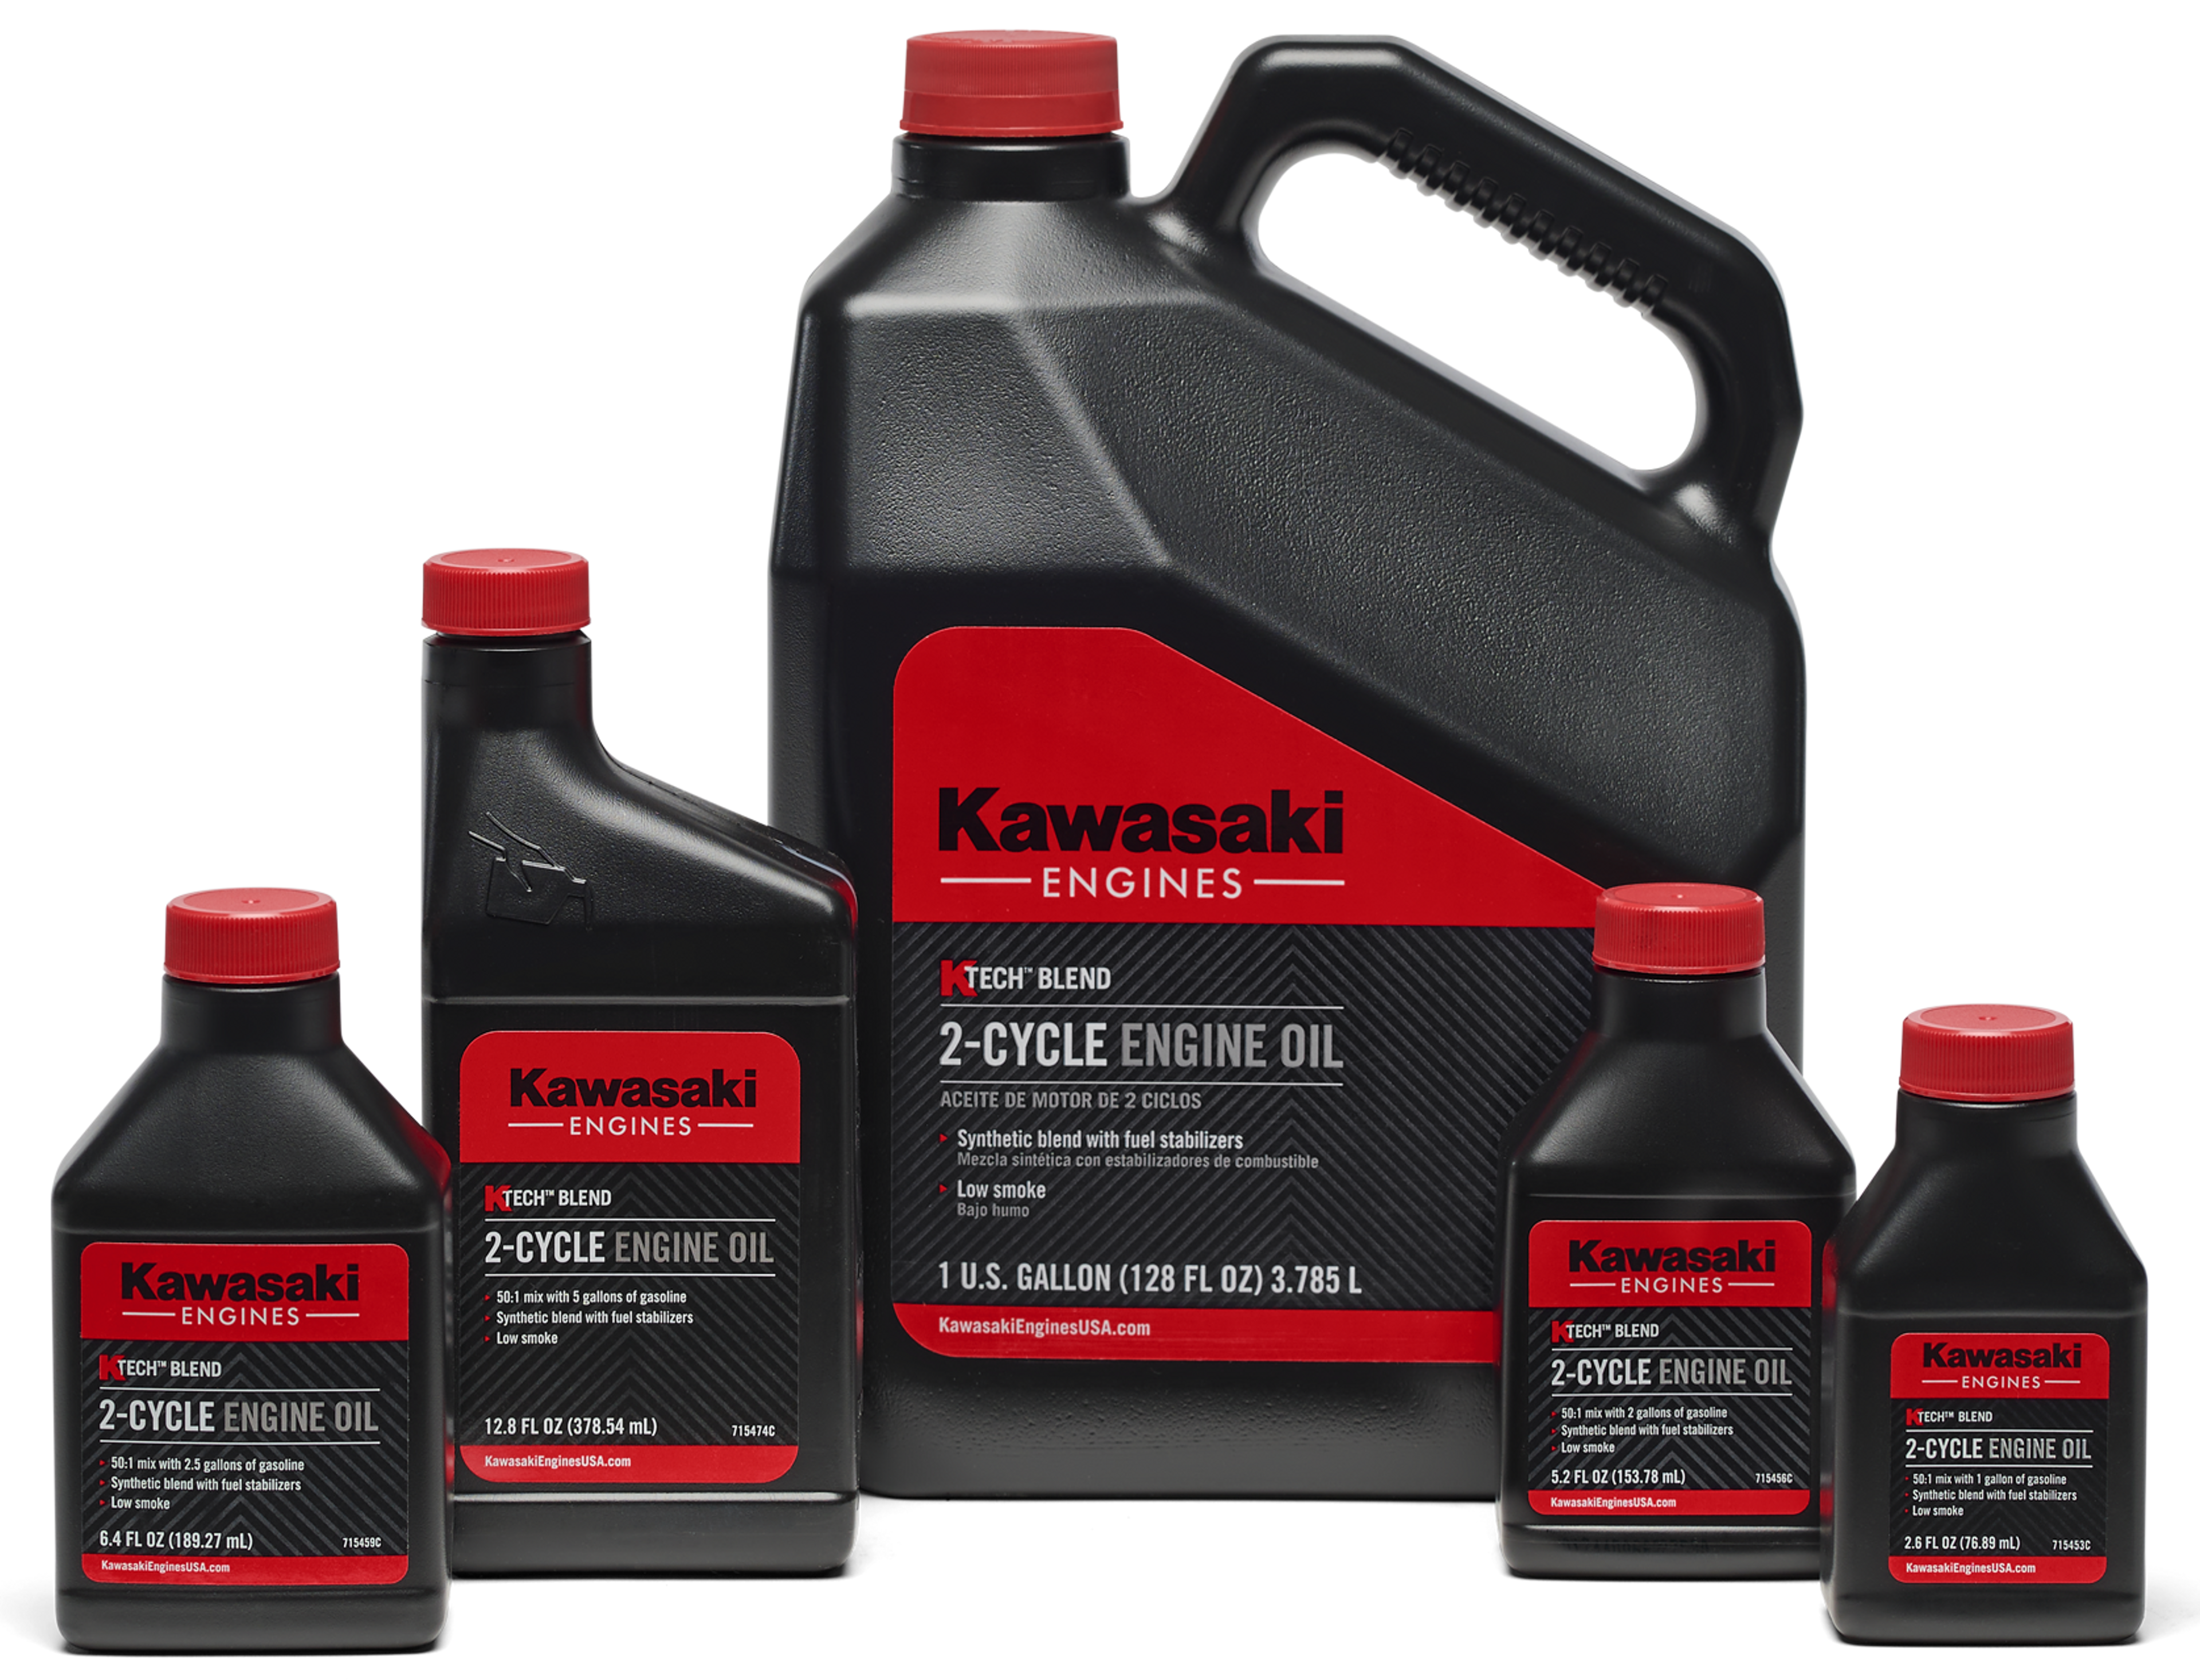 Kawasaki KTECH™ BLEND 2-Cycle Engine Oil